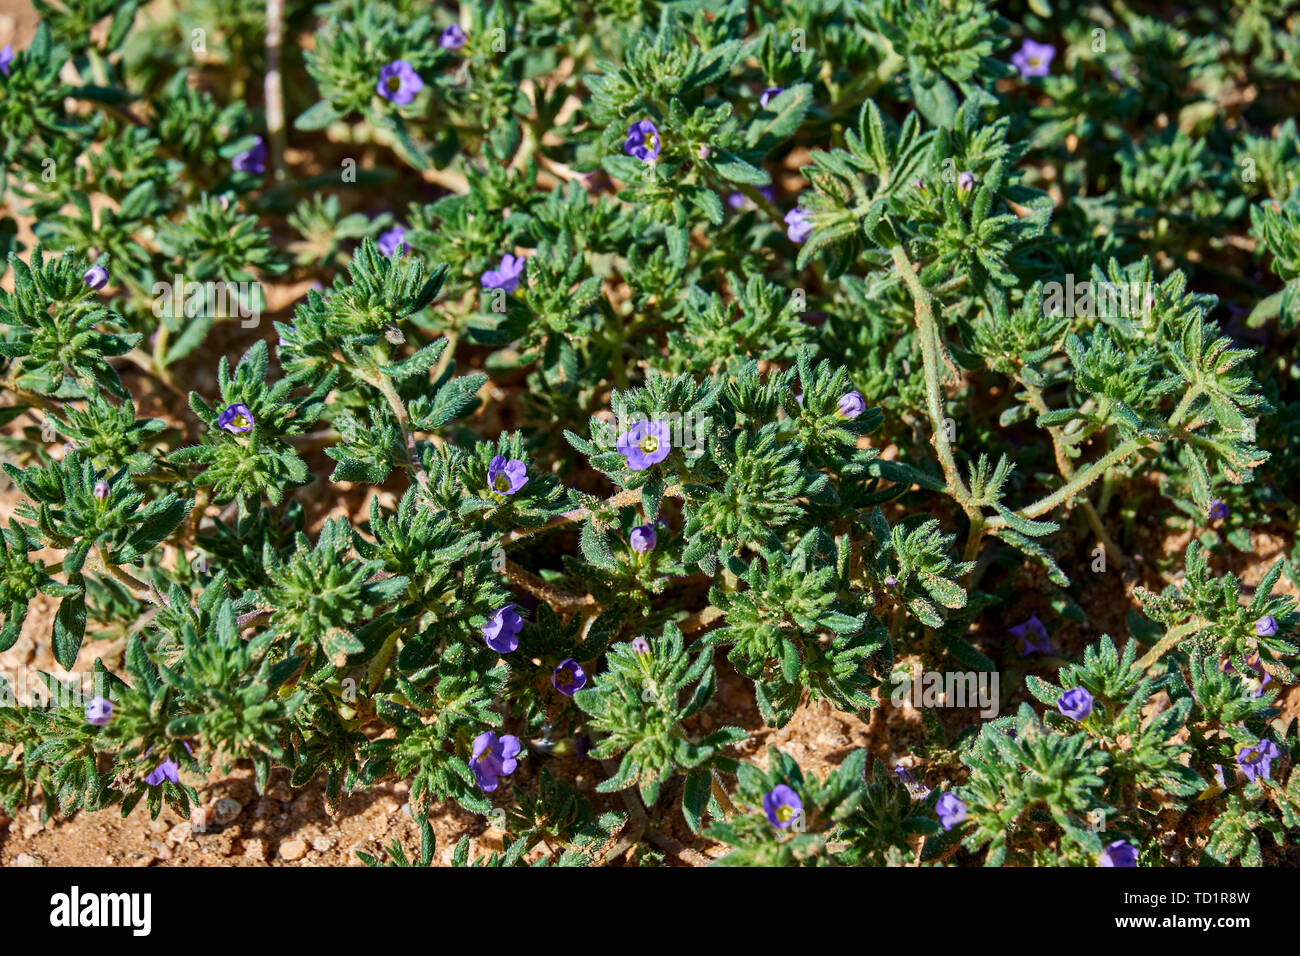 Sea heath, Frankenia pulverulenta L. Growing wild in West Central Texas Stock Photo